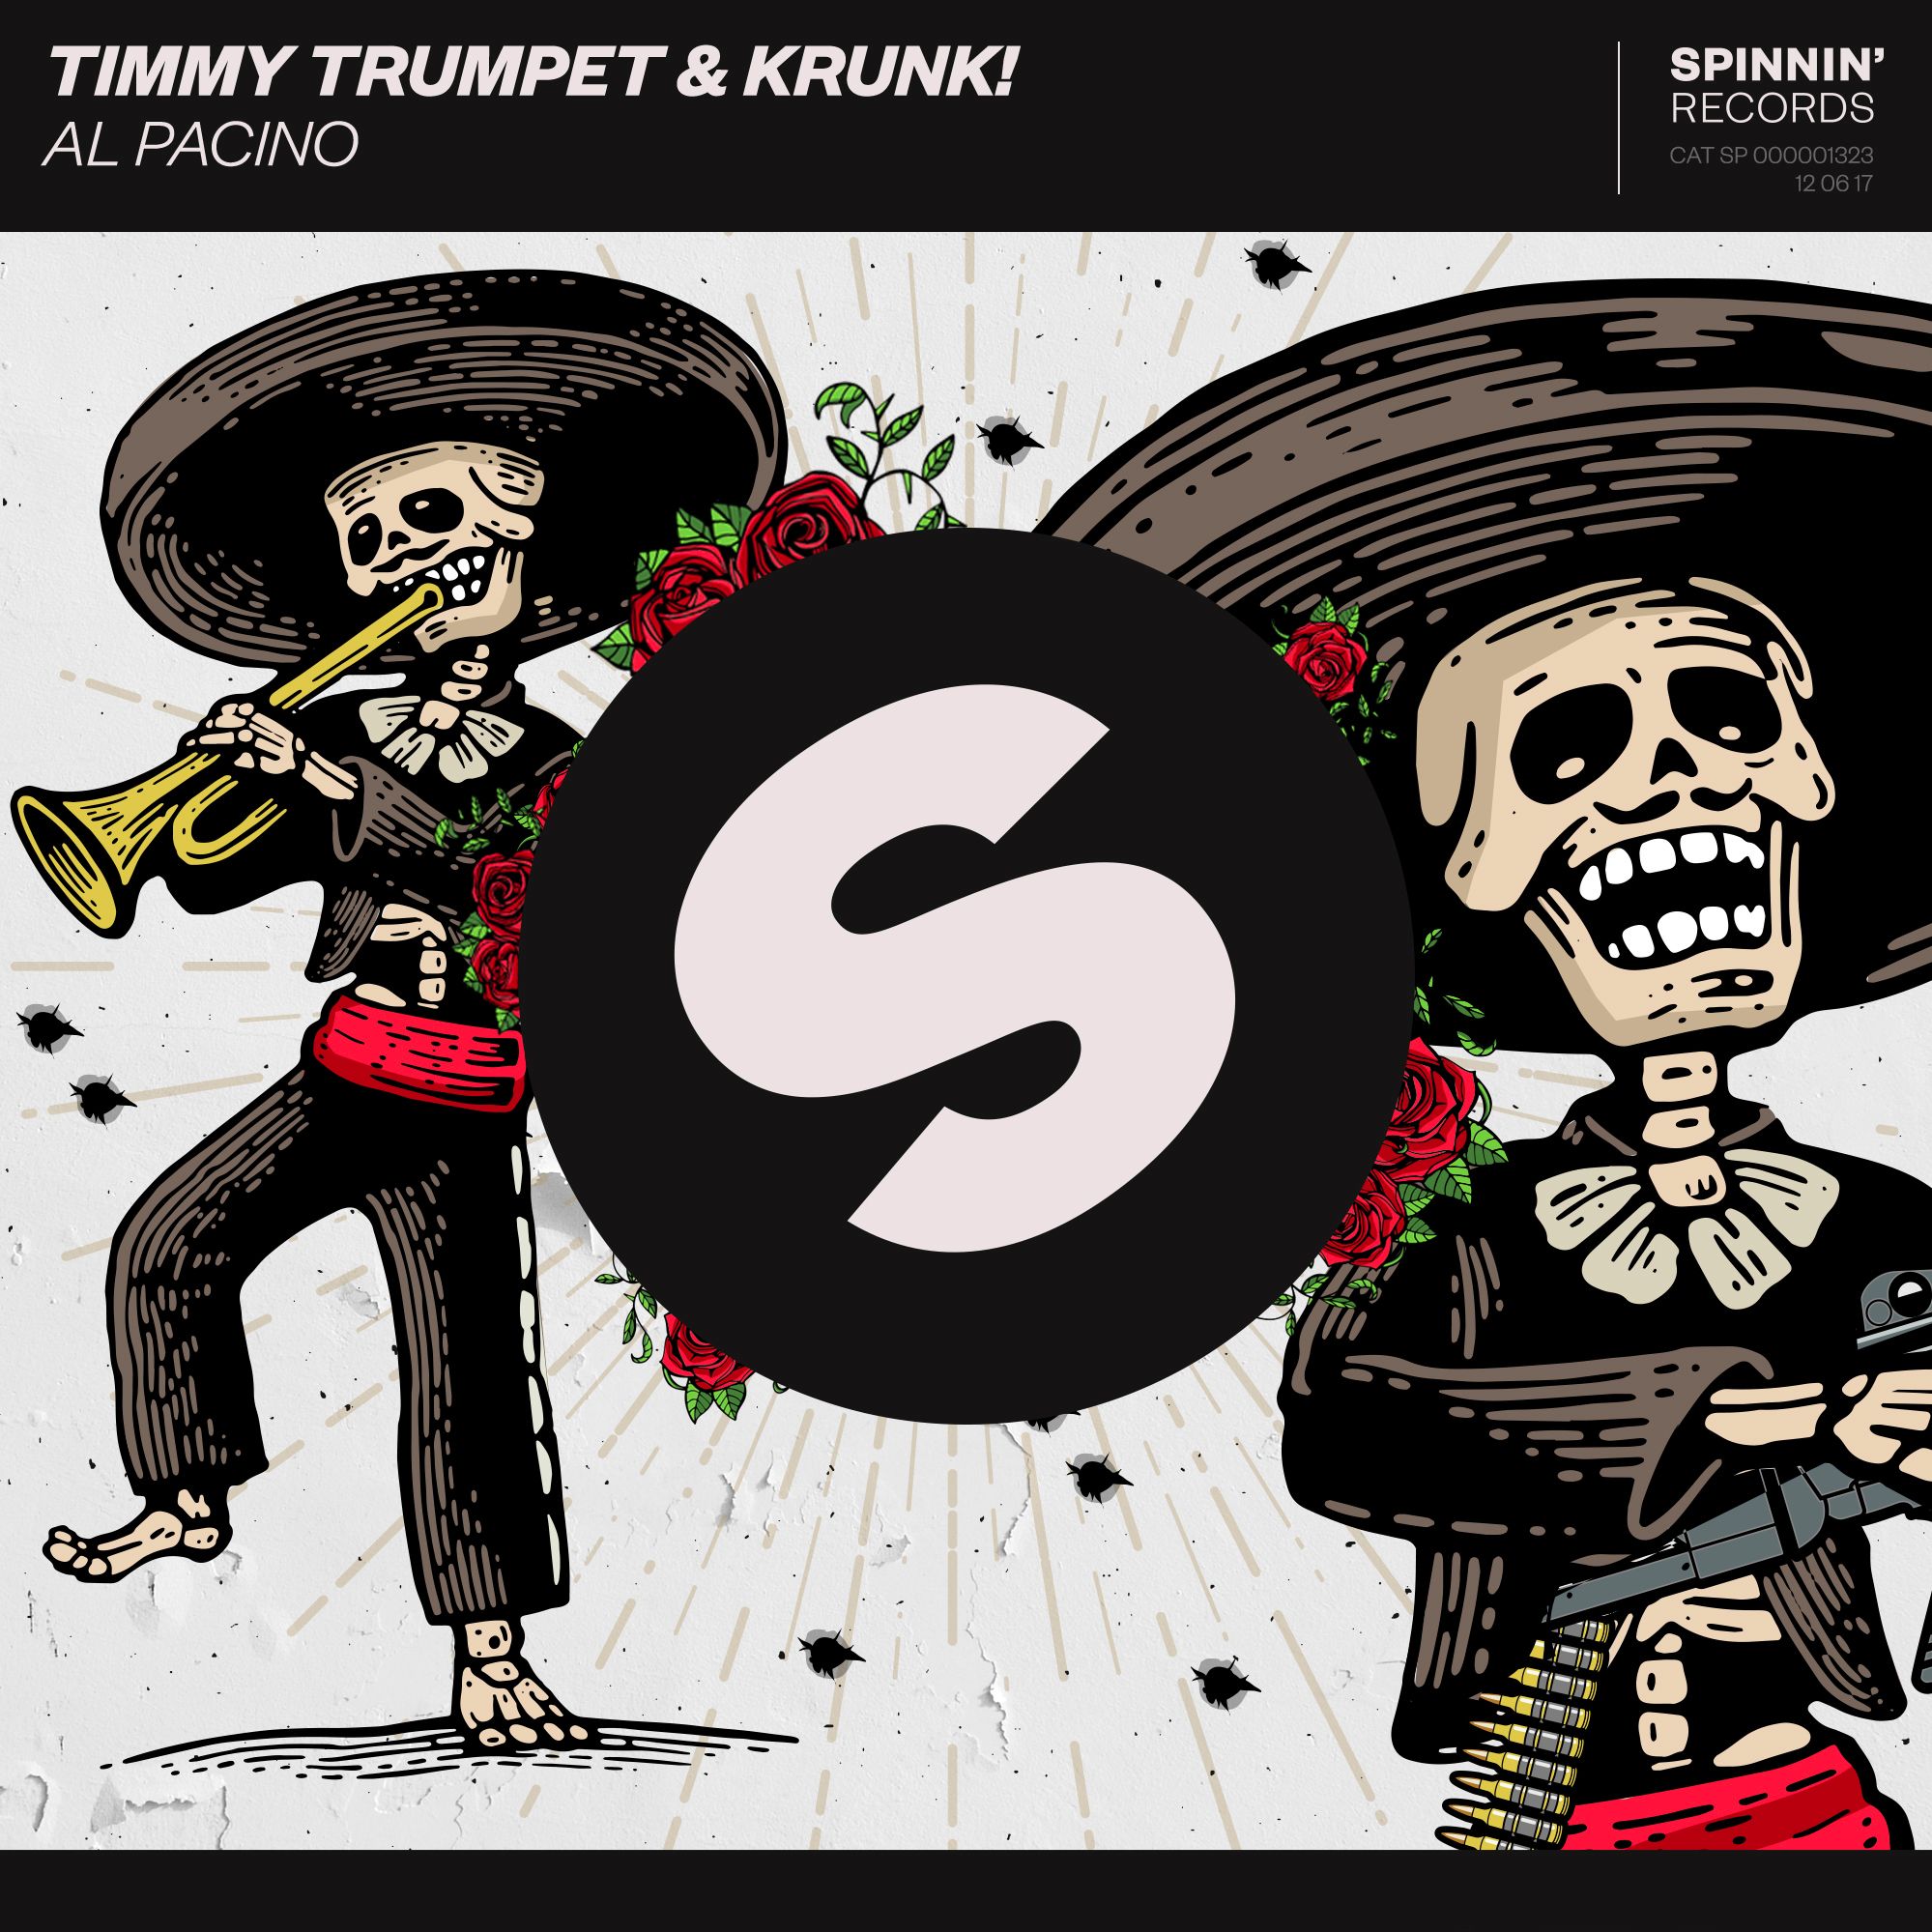 डाउनलोड करा Timmy Trumpet & Krunk! - Al Pacino [OUT NOW]